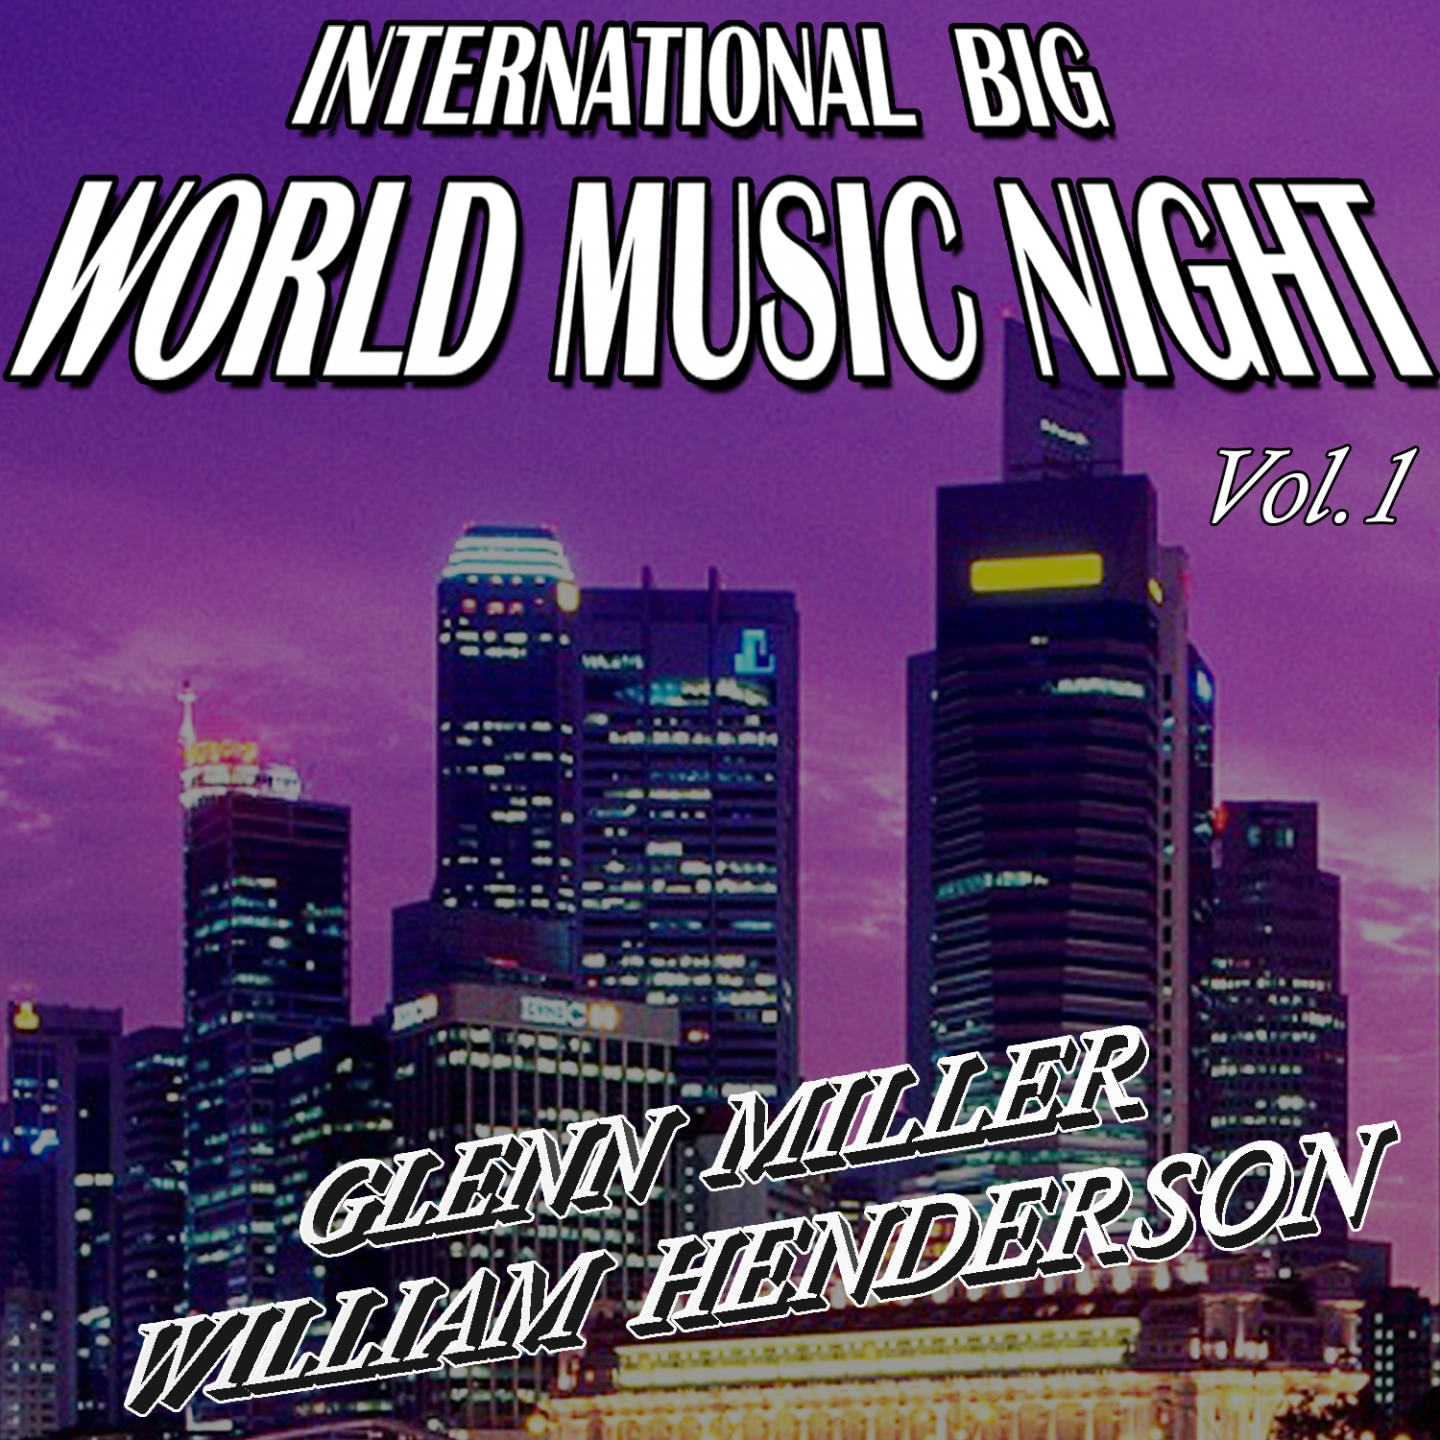 International Big World Music Night, Vol. 1